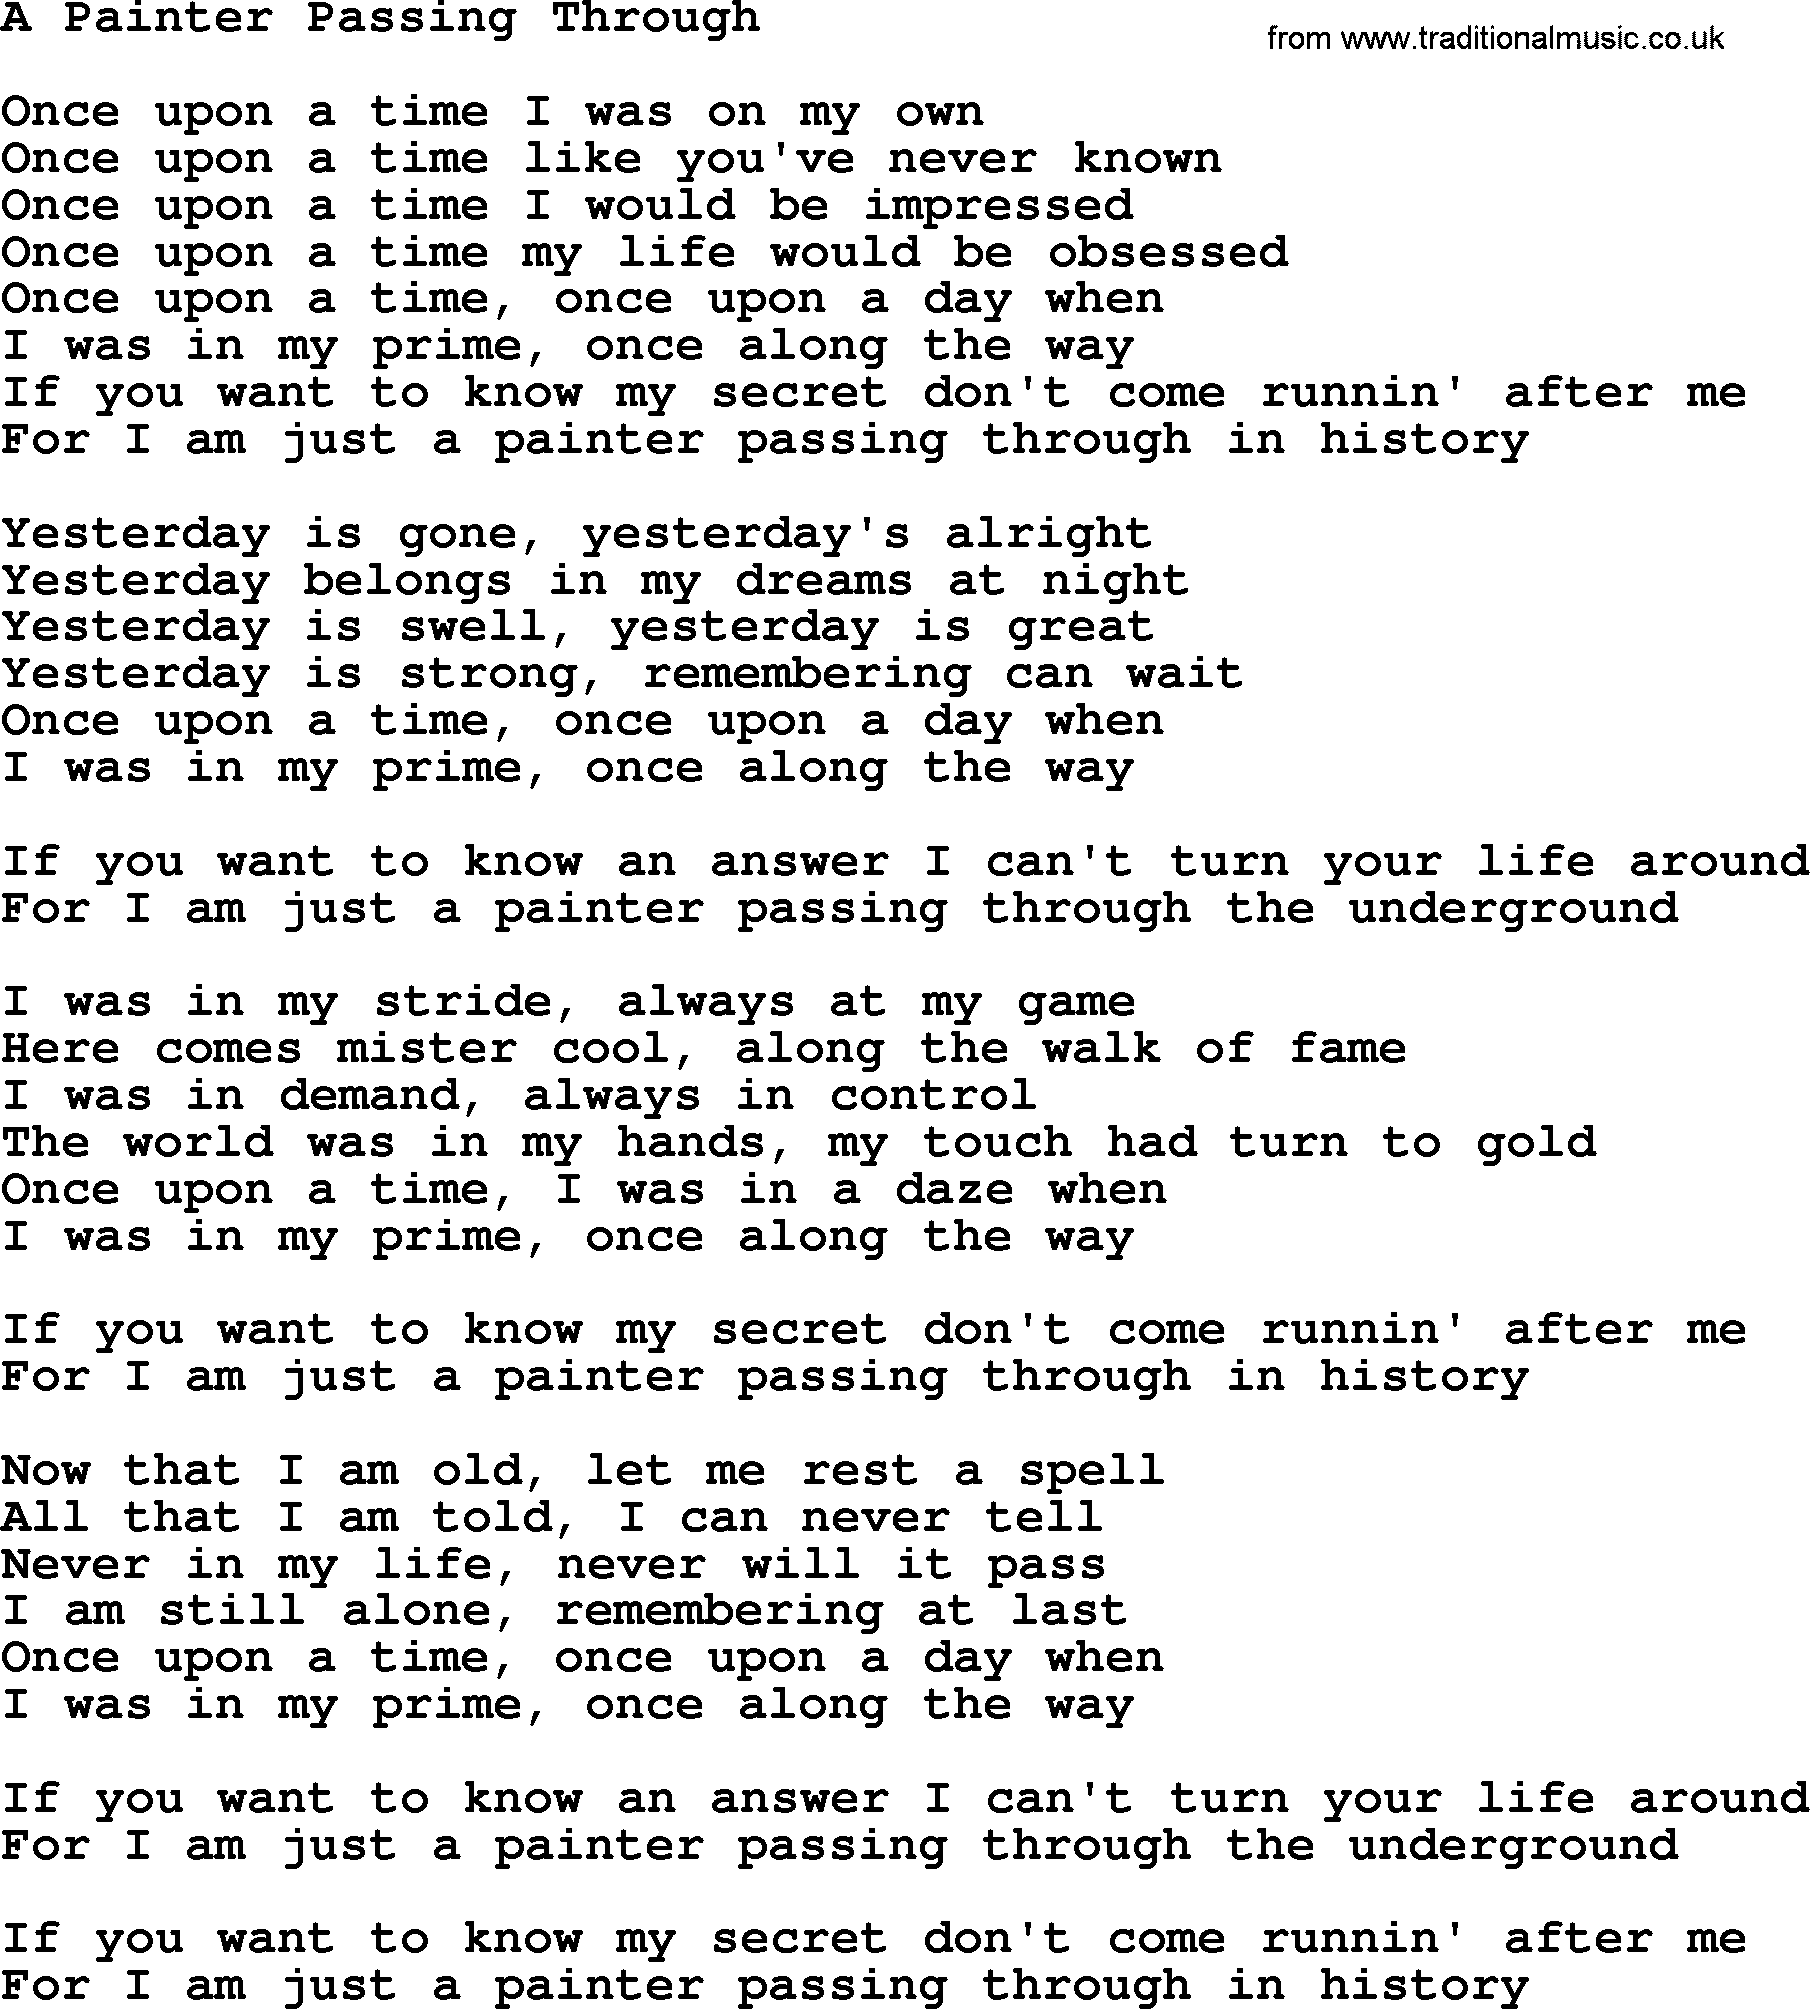 Gordon Lightfoot song A Painter Passing Through, lyrics